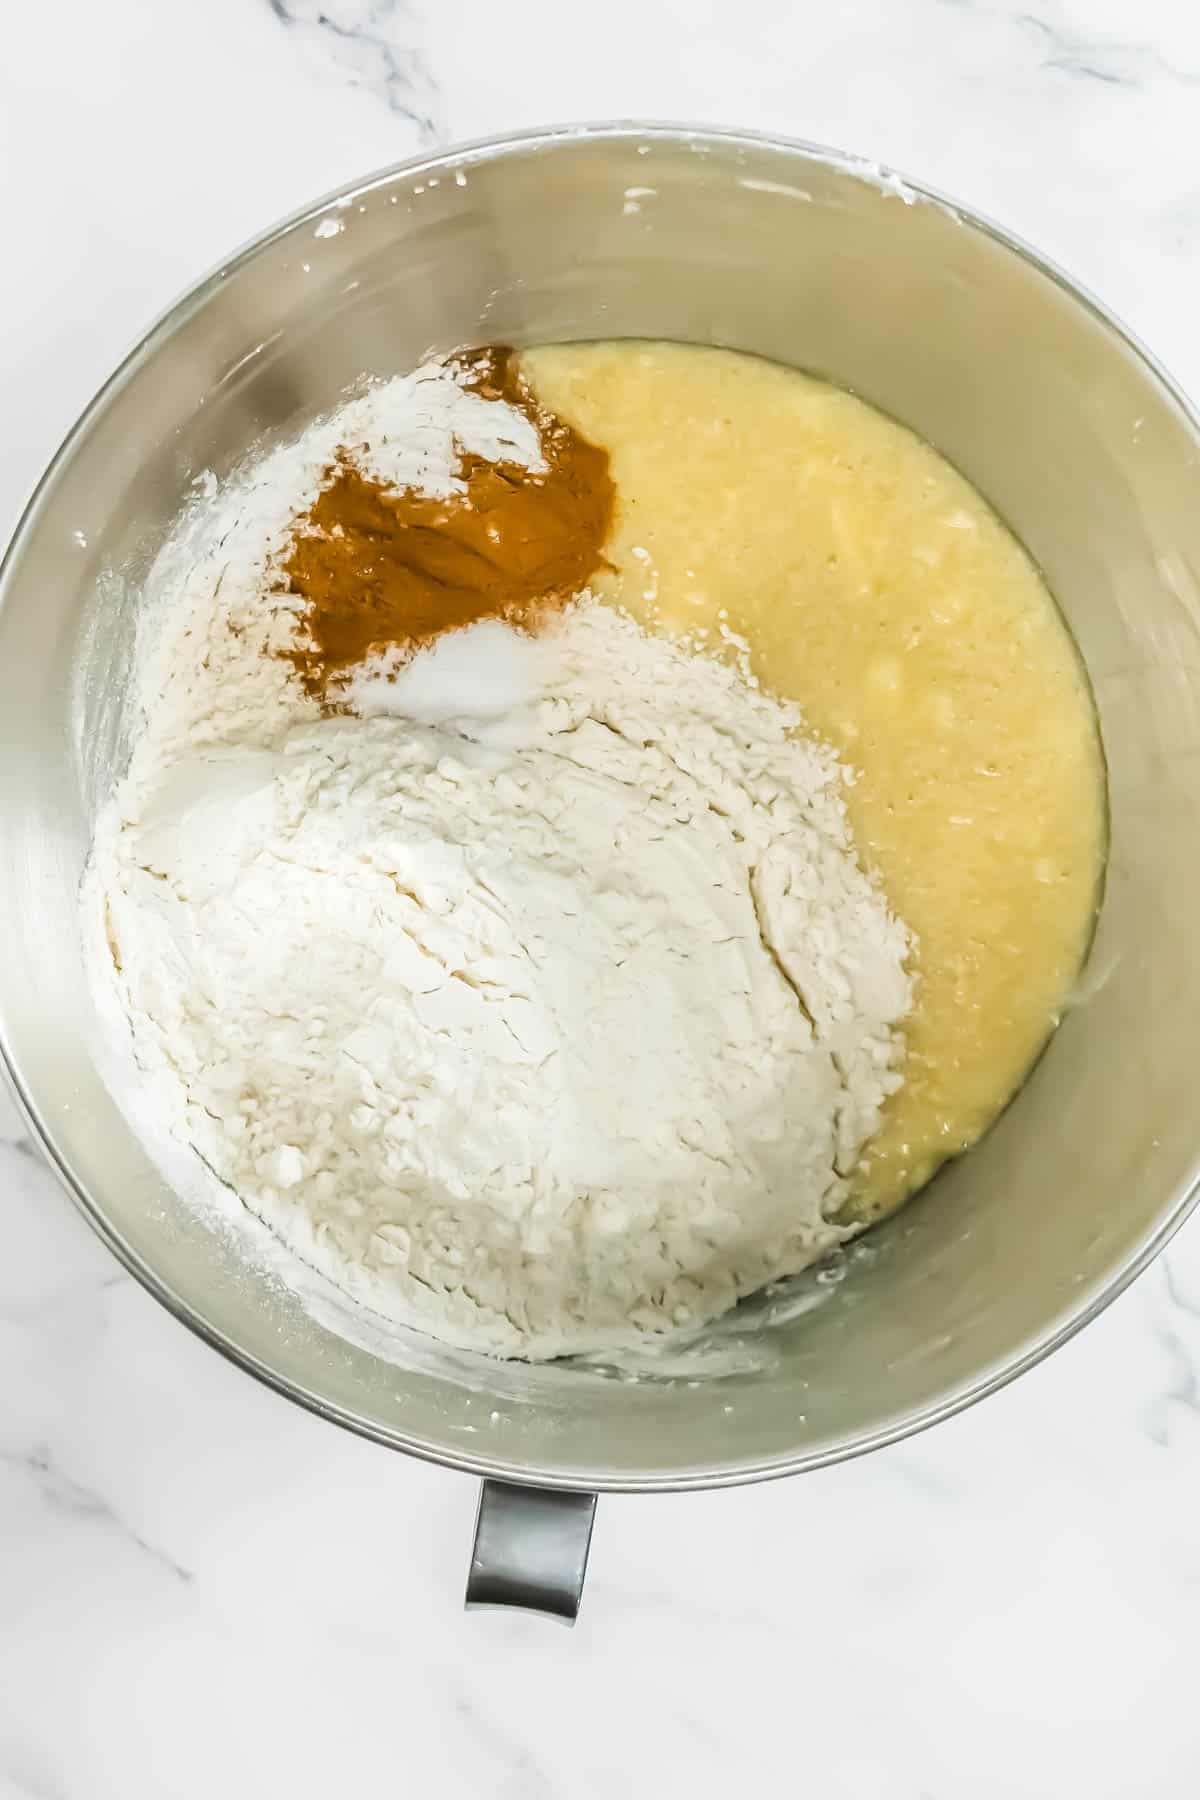 Cinnamon, salt, baking powder and flour added to the RumChata cupcake batter.